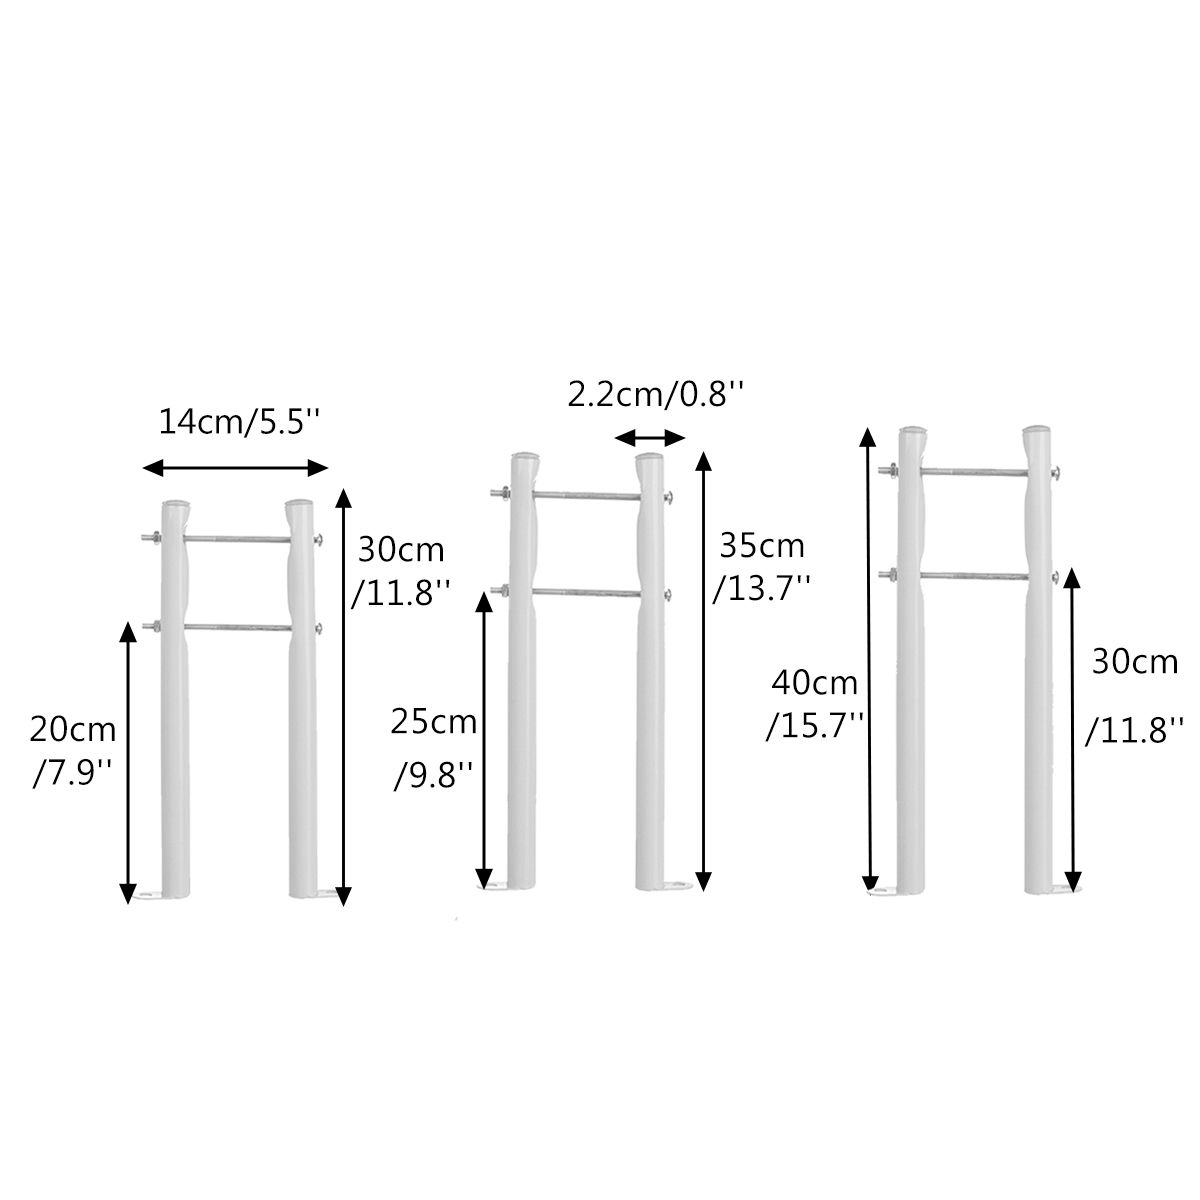 Universal-Column-Radiator-Leg-Support-Feet-Steel-Bracket-202530-CM-From-The-Ground-1628417